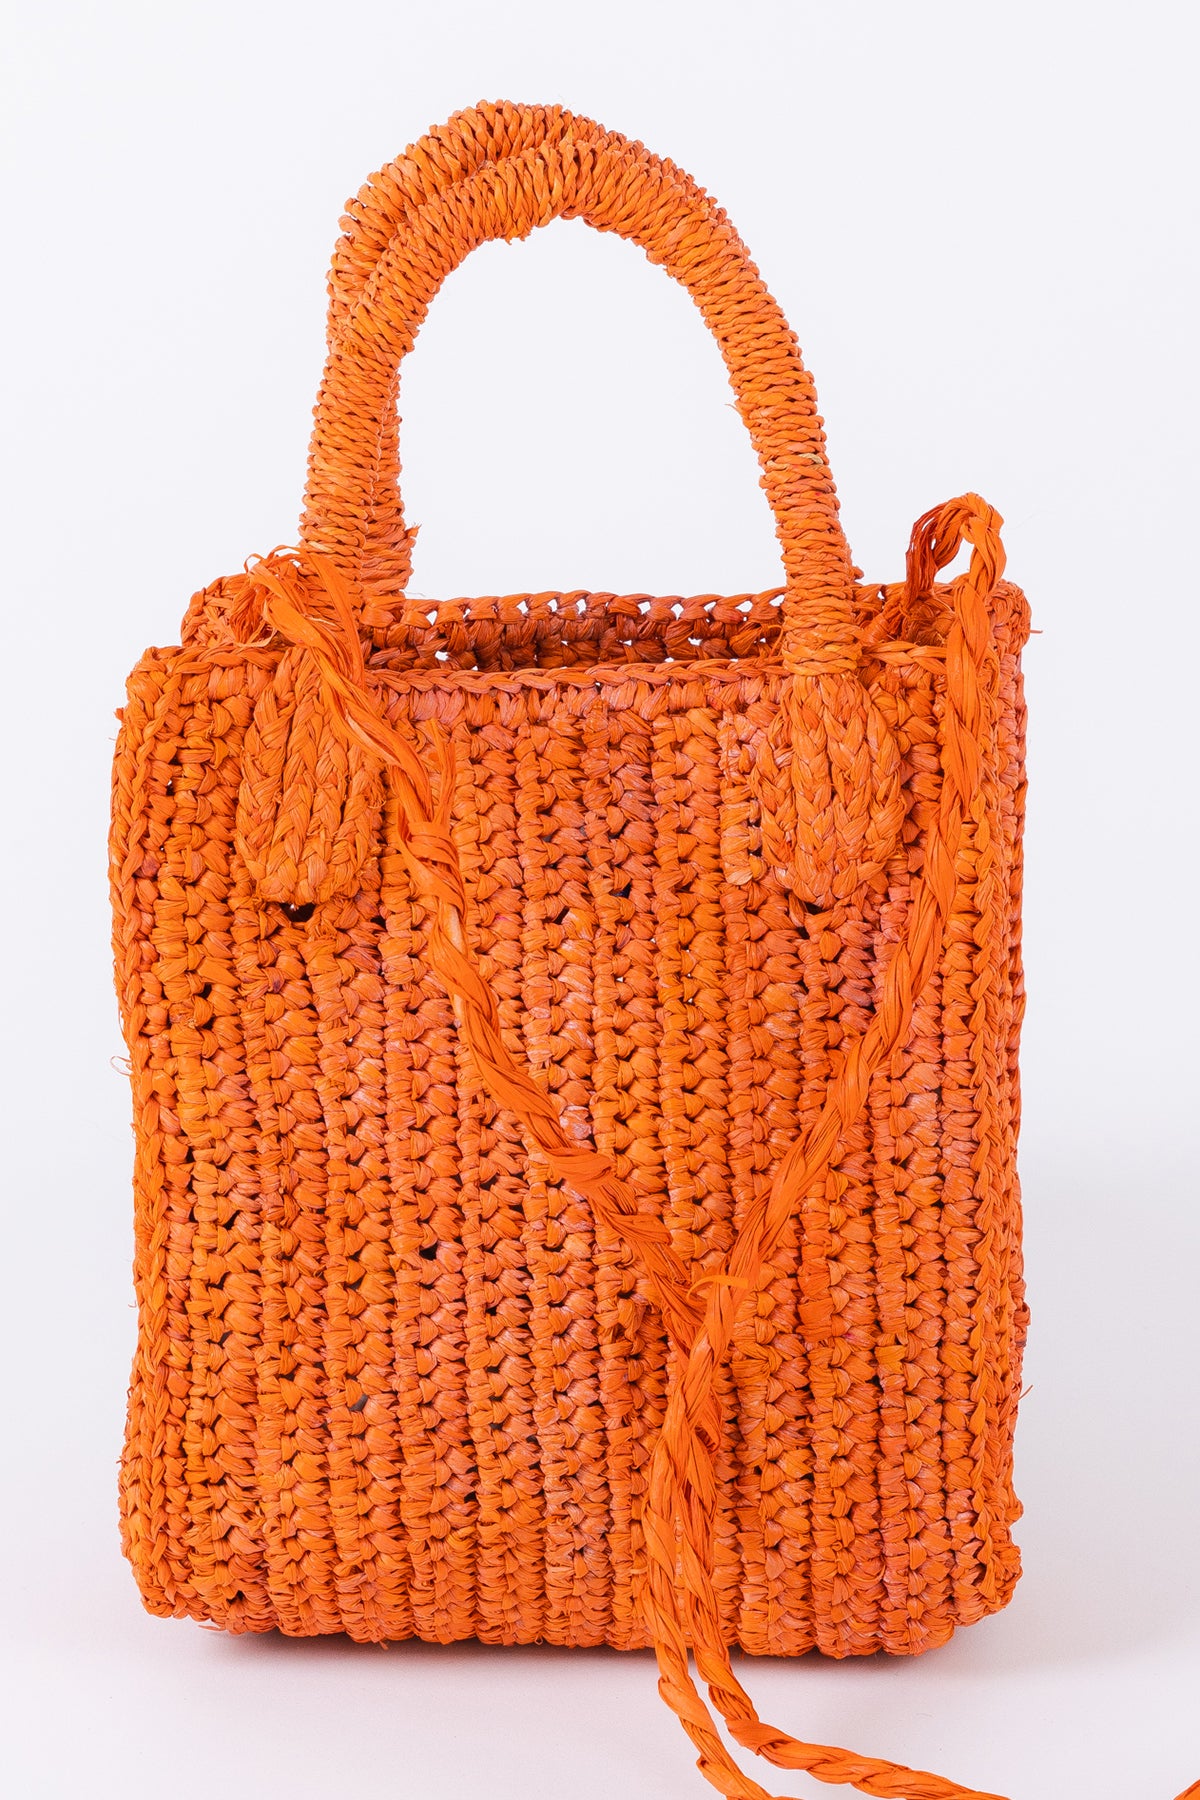 MIMI RAFFIA CROSSBODY handbag with tassel details on a white background, by Velvet by Graham & Spencer.-26051037429953